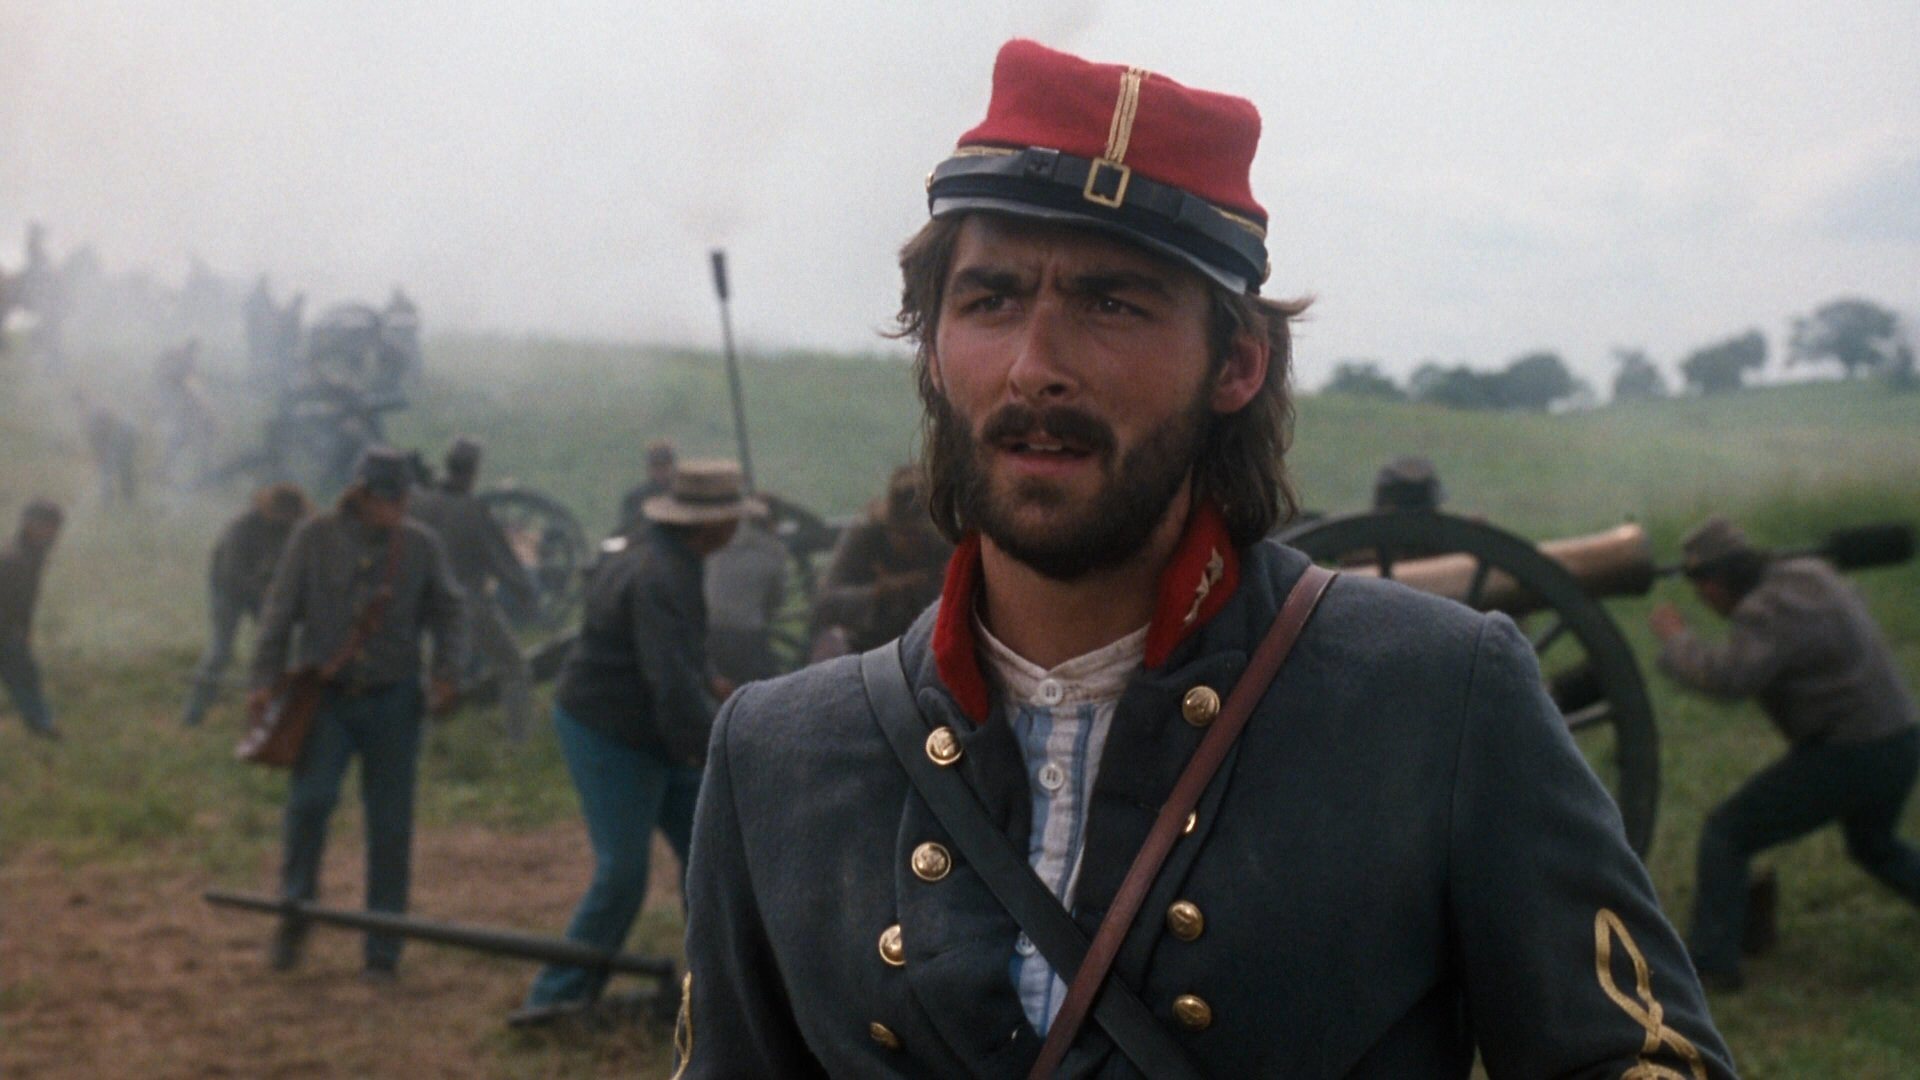 Working Cinematographer - Cinematography in Gettysburg - ProductionBeast